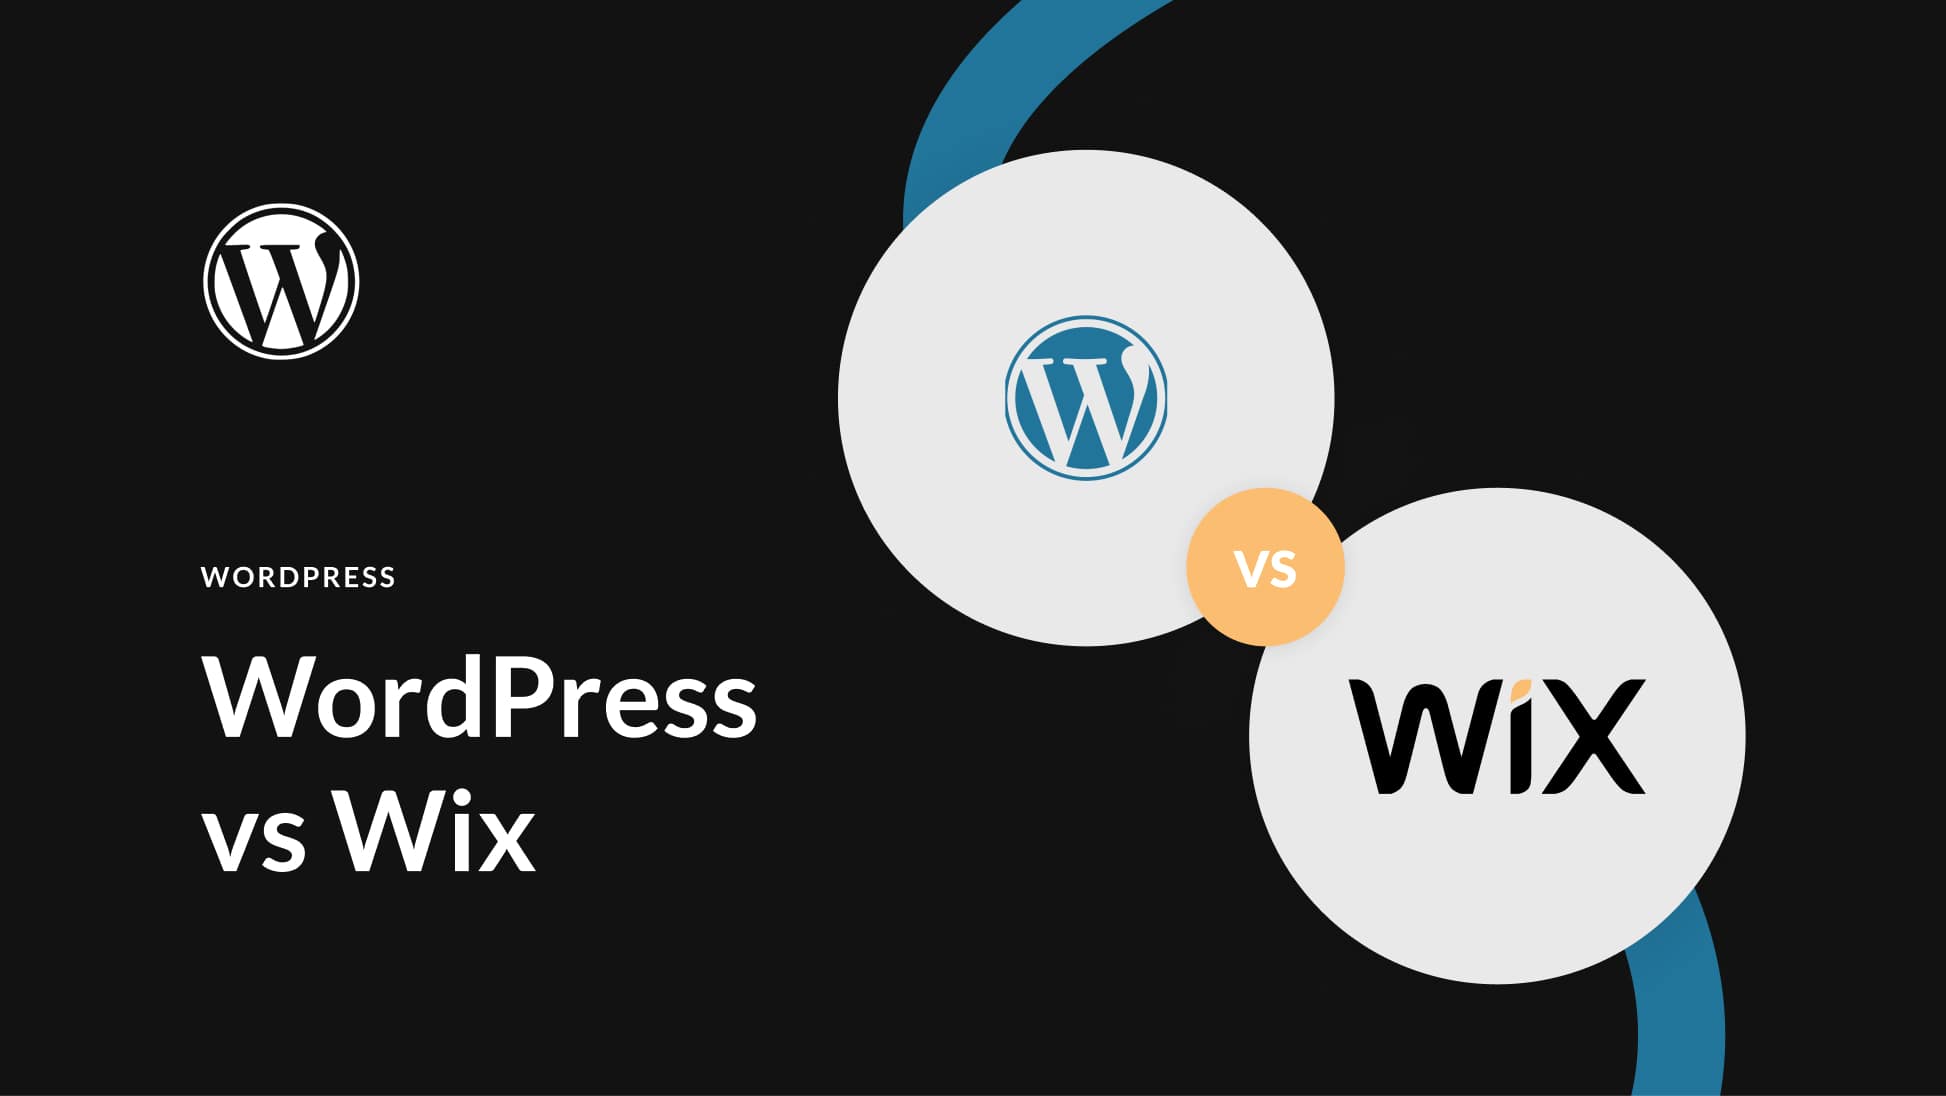 WordPress vs Wix Comparison Image